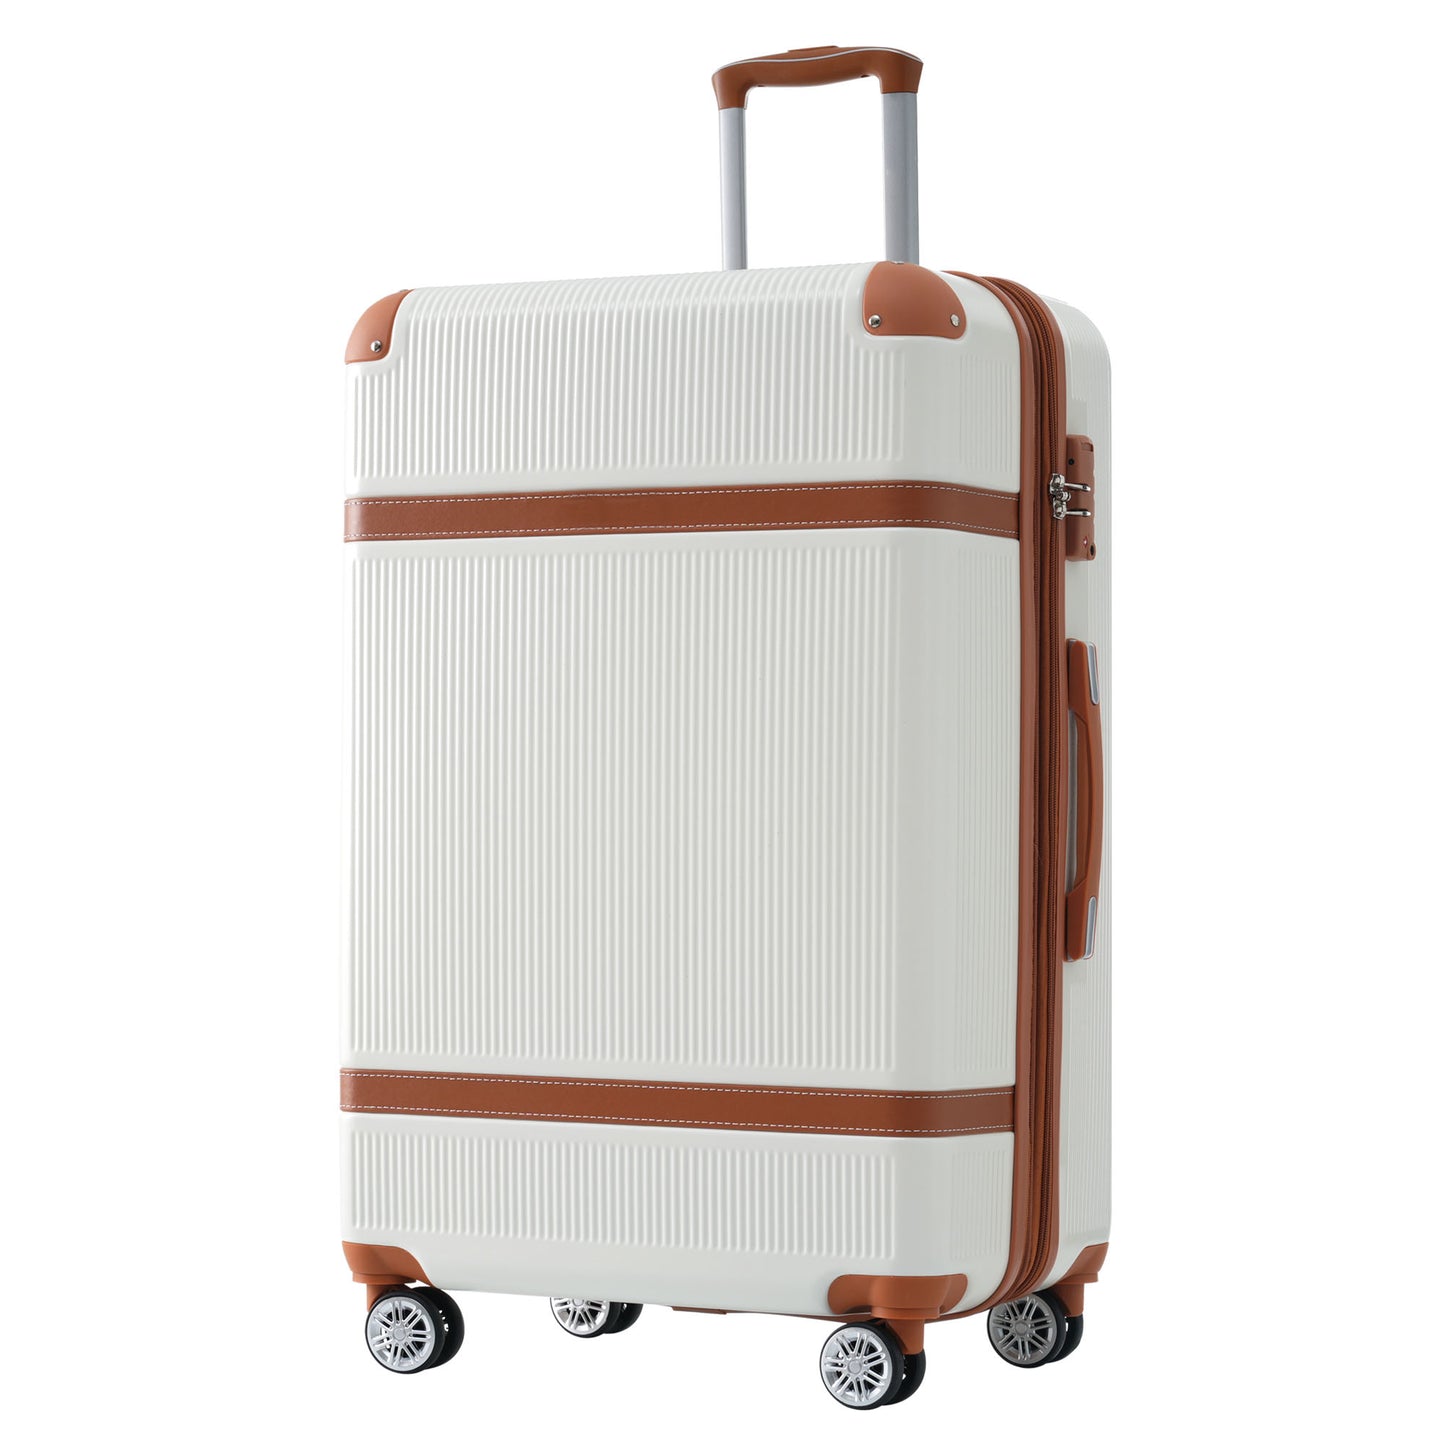 3-Piece Vintage Style Luggage Set in White